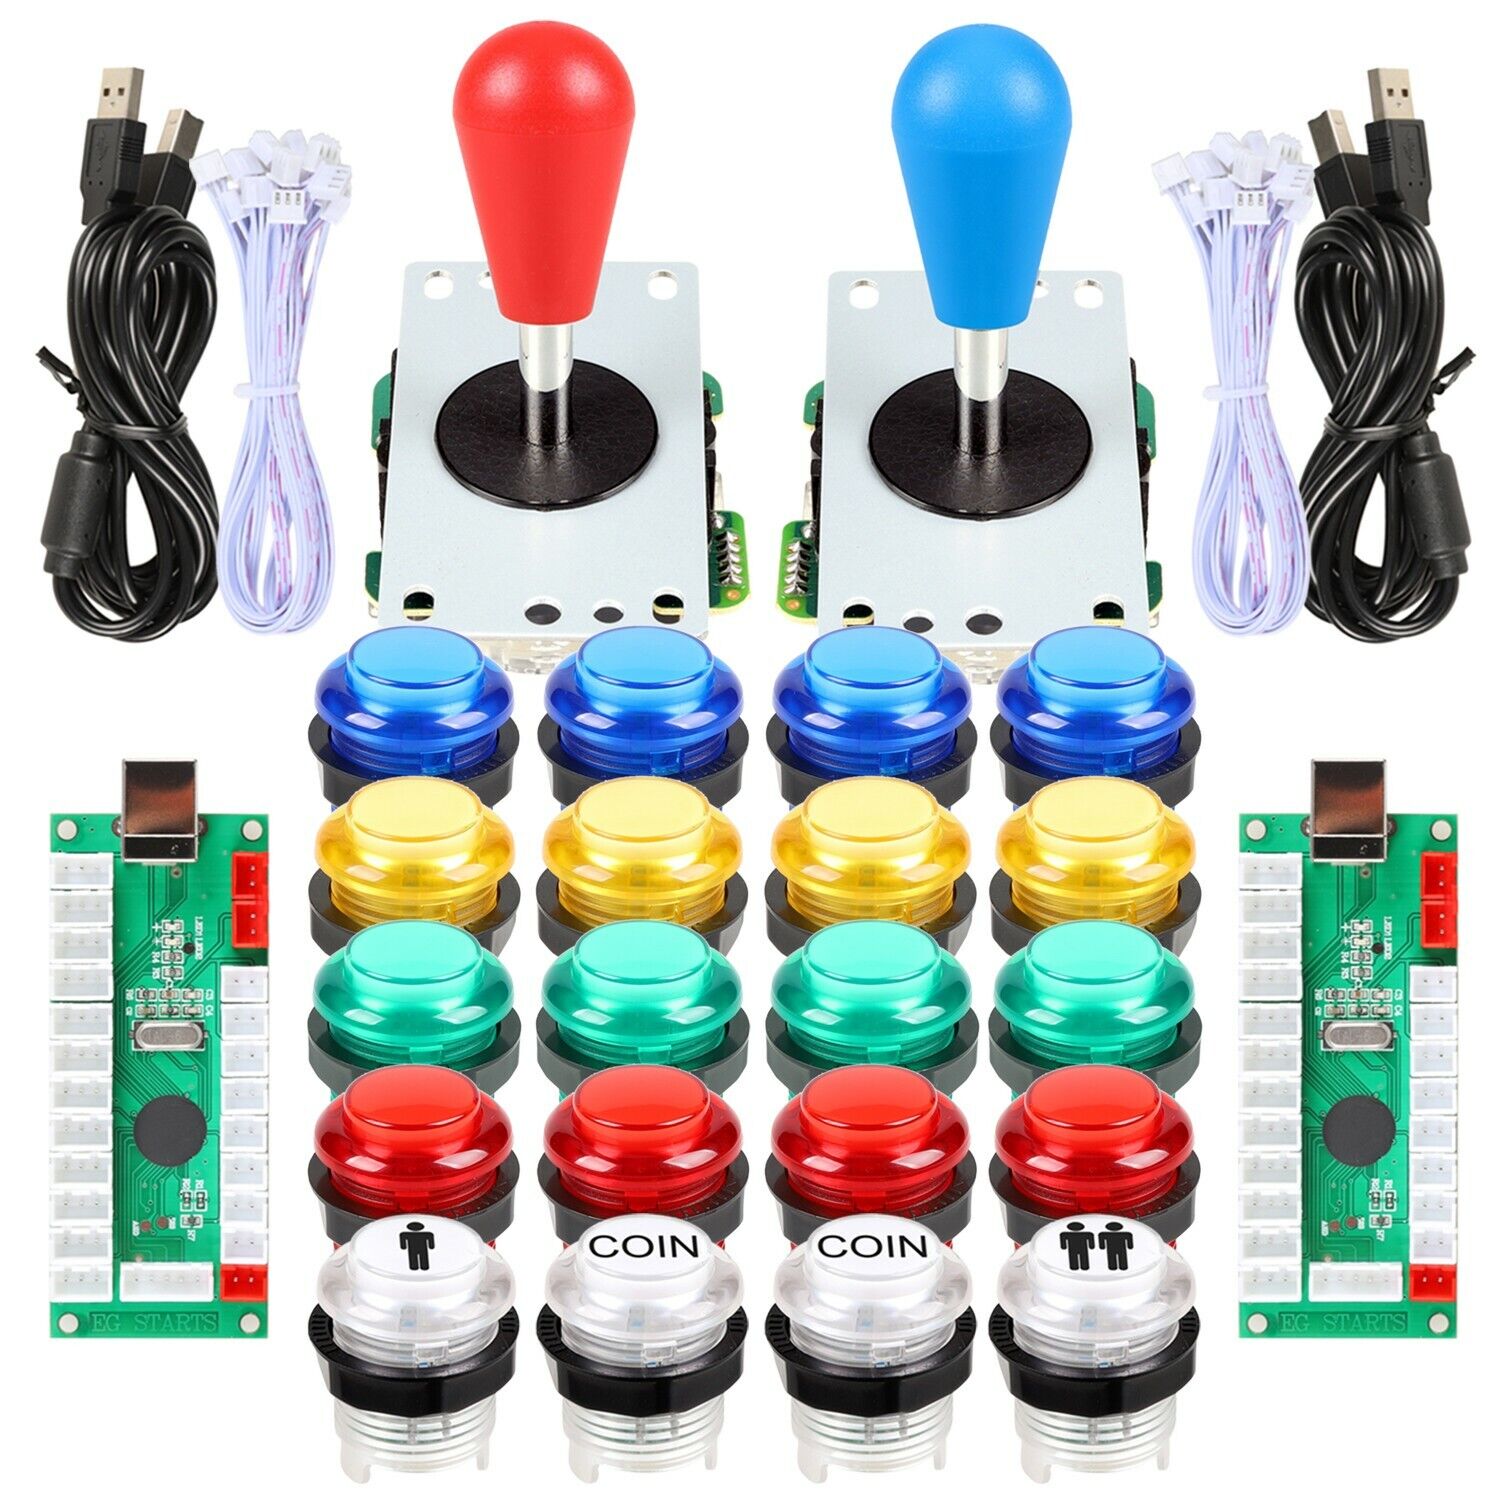 2 Player Arcade DIY Kits USB Joystick + 5V LED Arcade Buttons for Raspberry pie